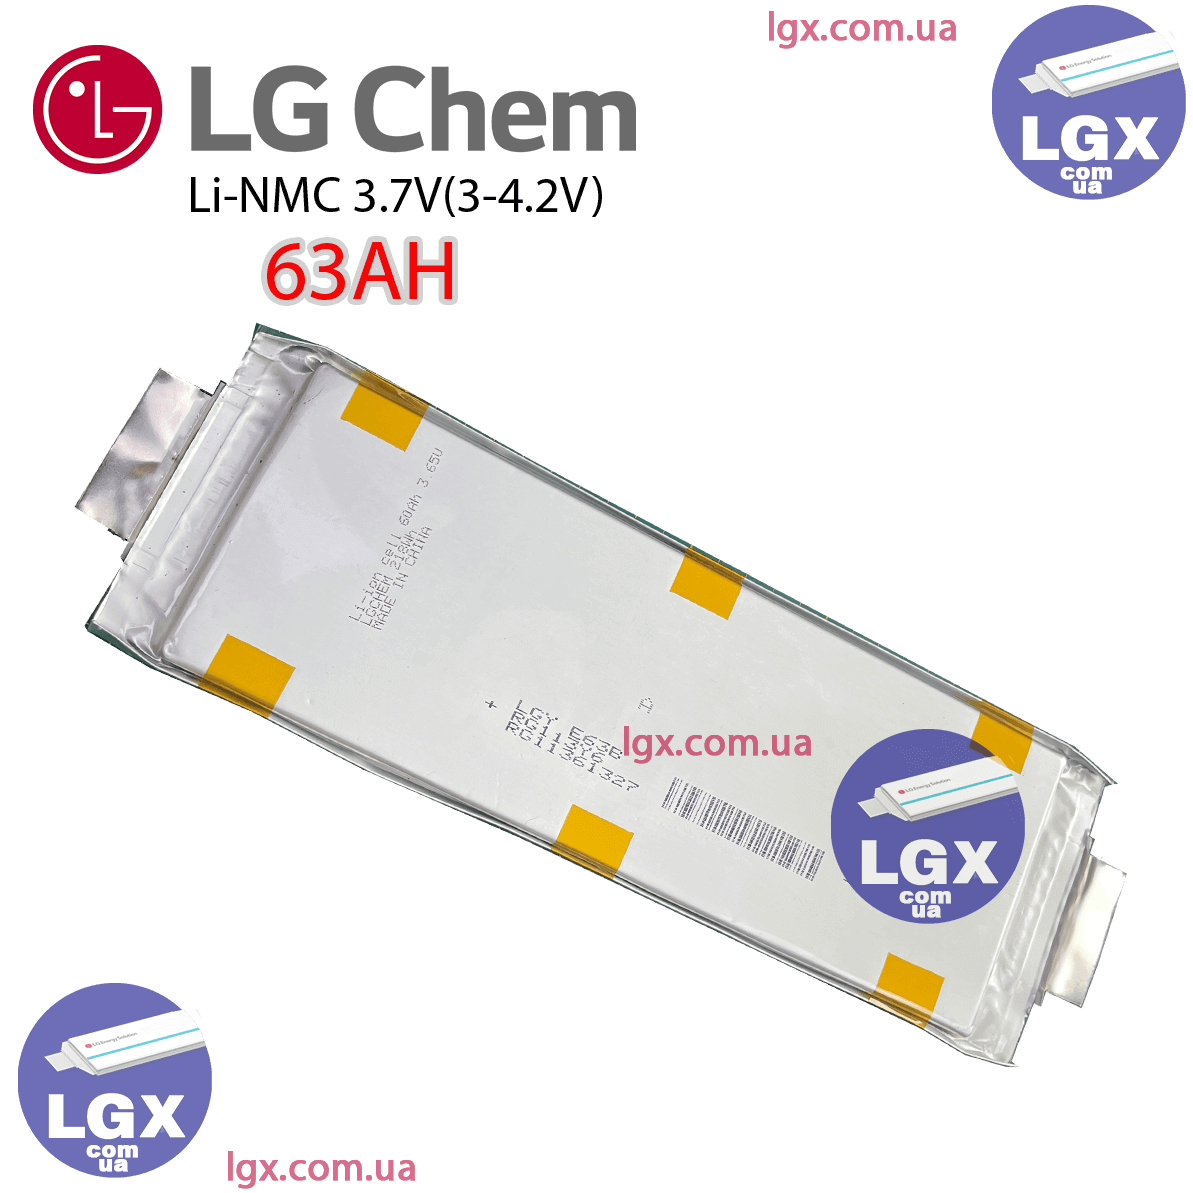 Аккумуляторный елемент LG-Chem LGX-e63B химия NMC 3.6v (пакет) емкость 63А/Ч разряд 3-5c 2000 циклов 880грам